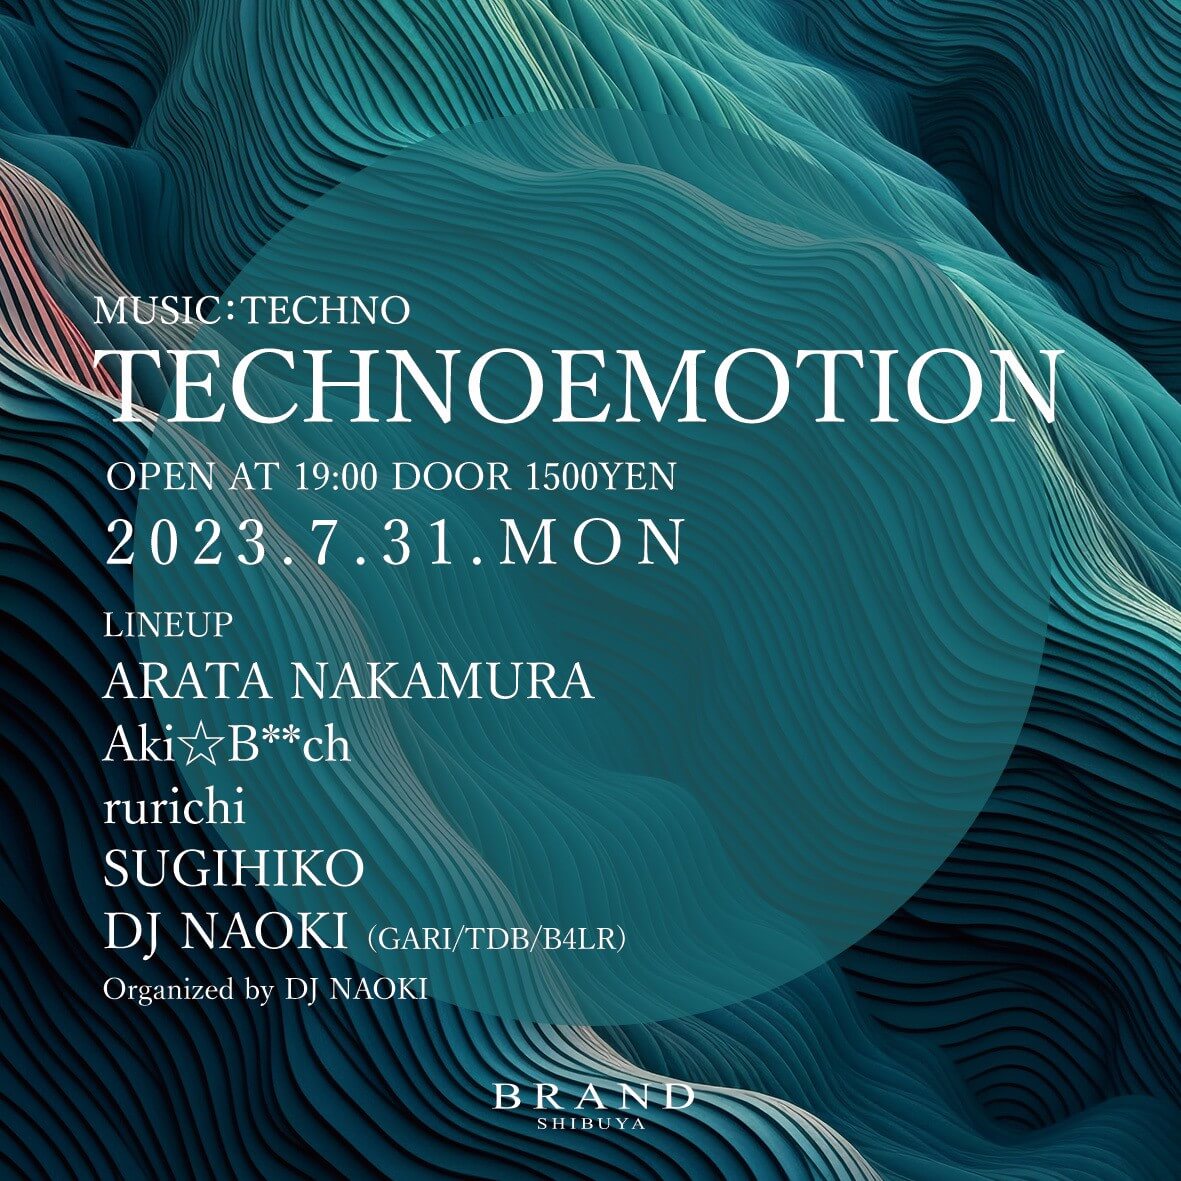 TECHNOEMOTION 2023年07月31日（月曜日）に渋谷 クラブのBRAND SHIBUYAで開催されるTECHNOイベント